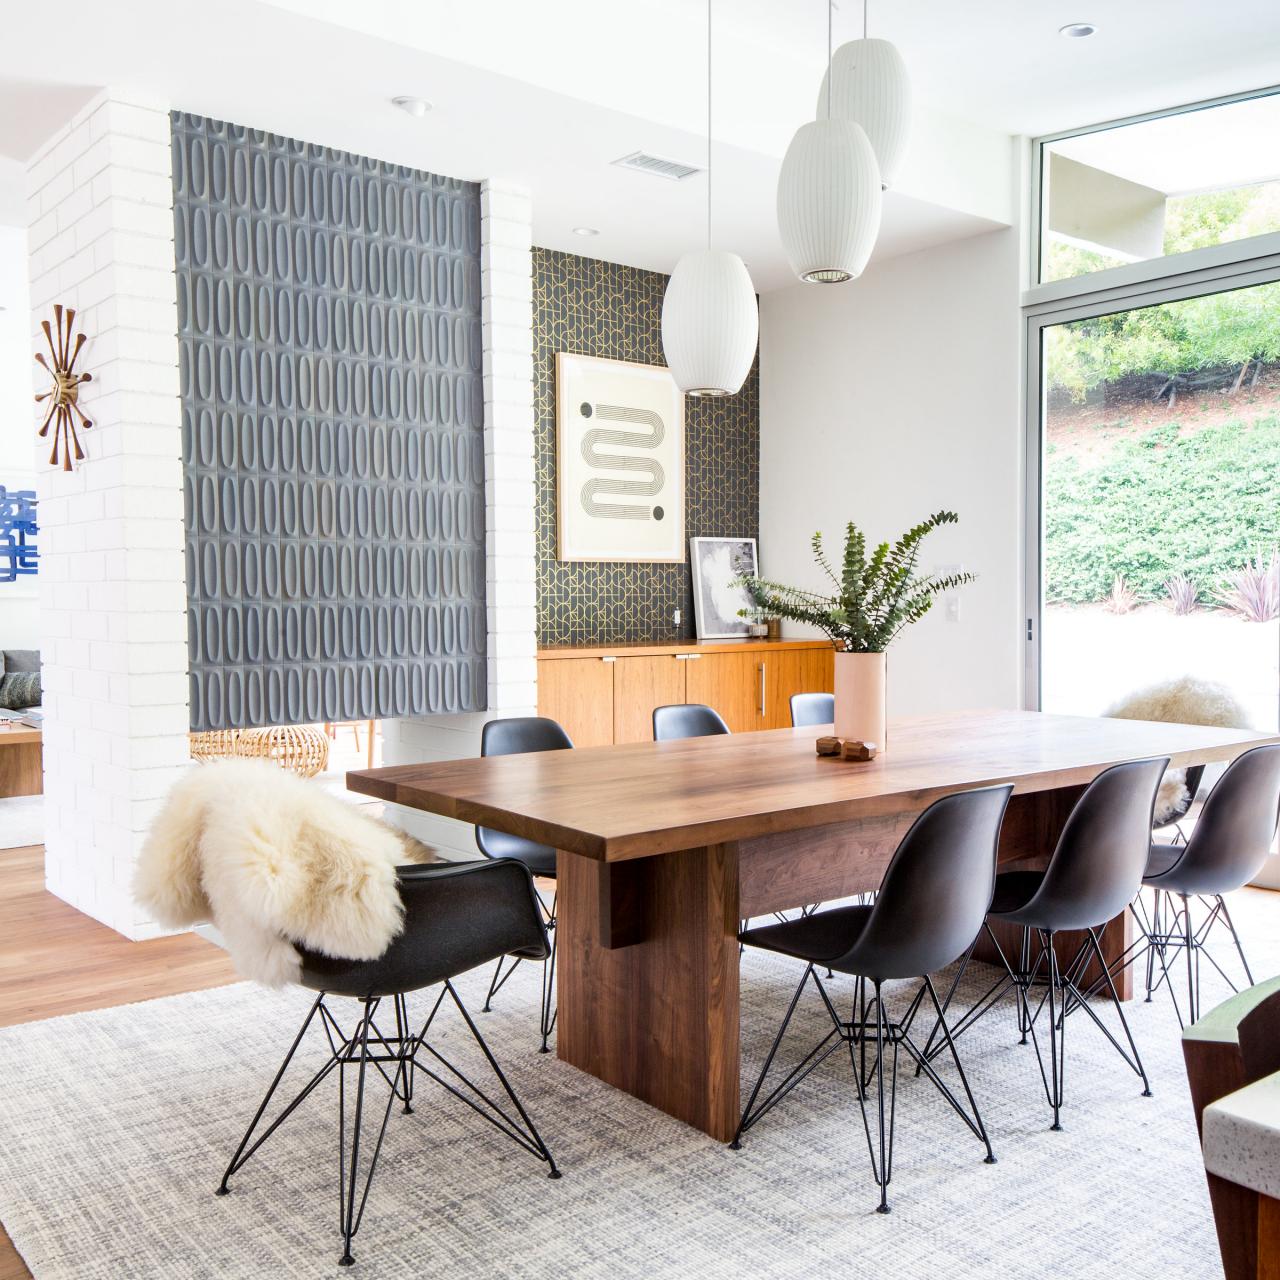 35 Simple And Elegant Asian Decor Ideas, Home Design And Interior